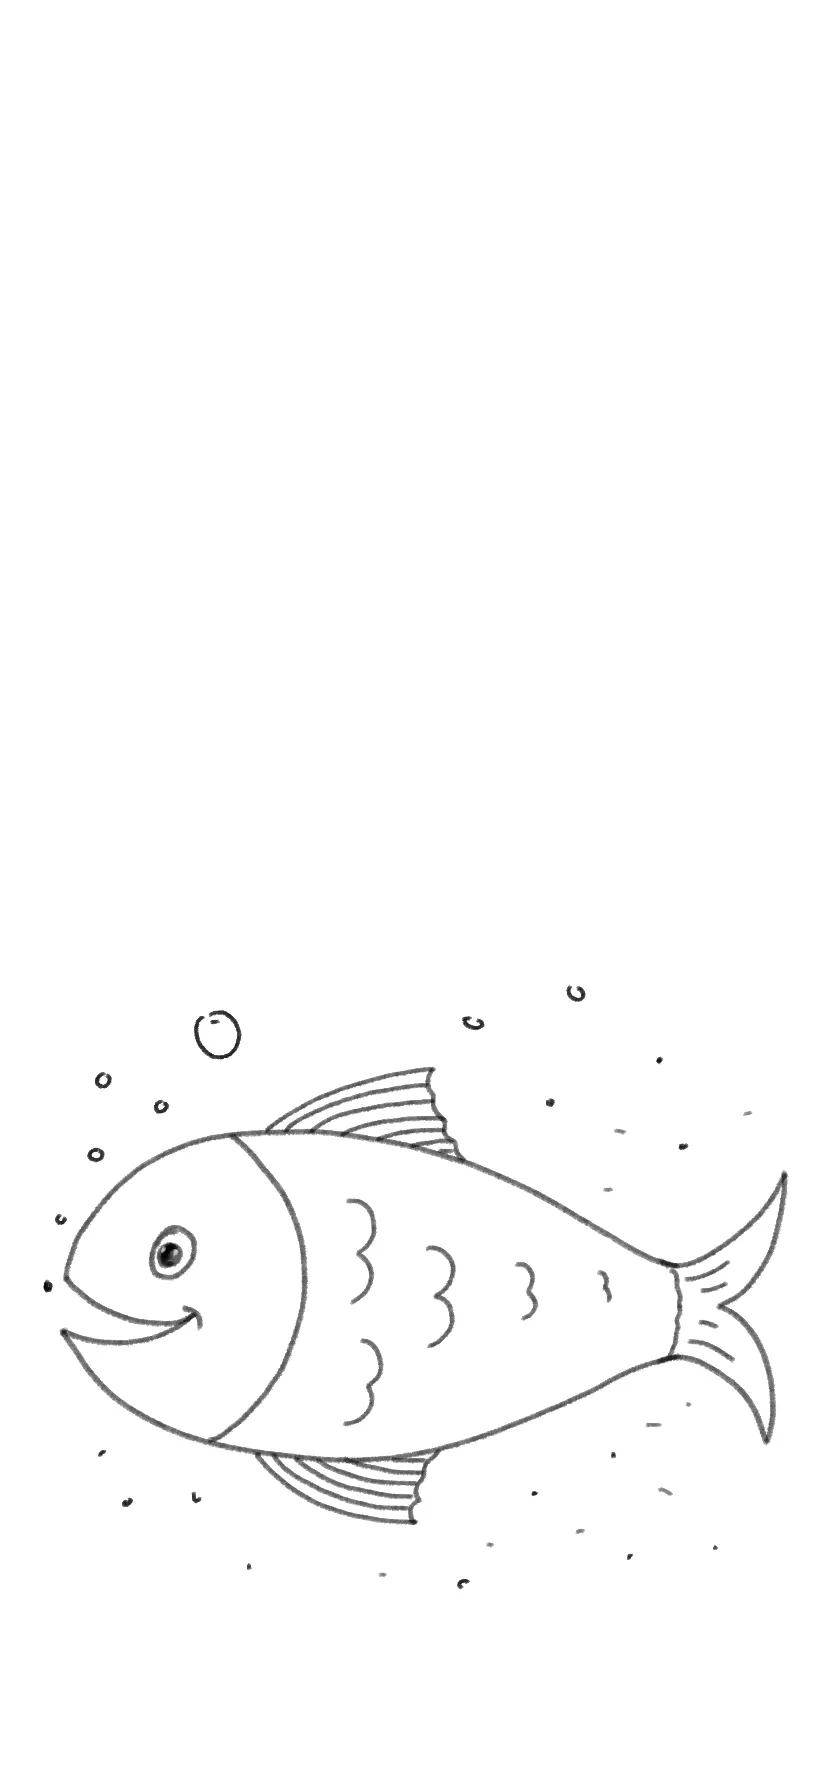 How to Draw a Fish for Kids - How to Draw Easy-saigonsouth.com.vn